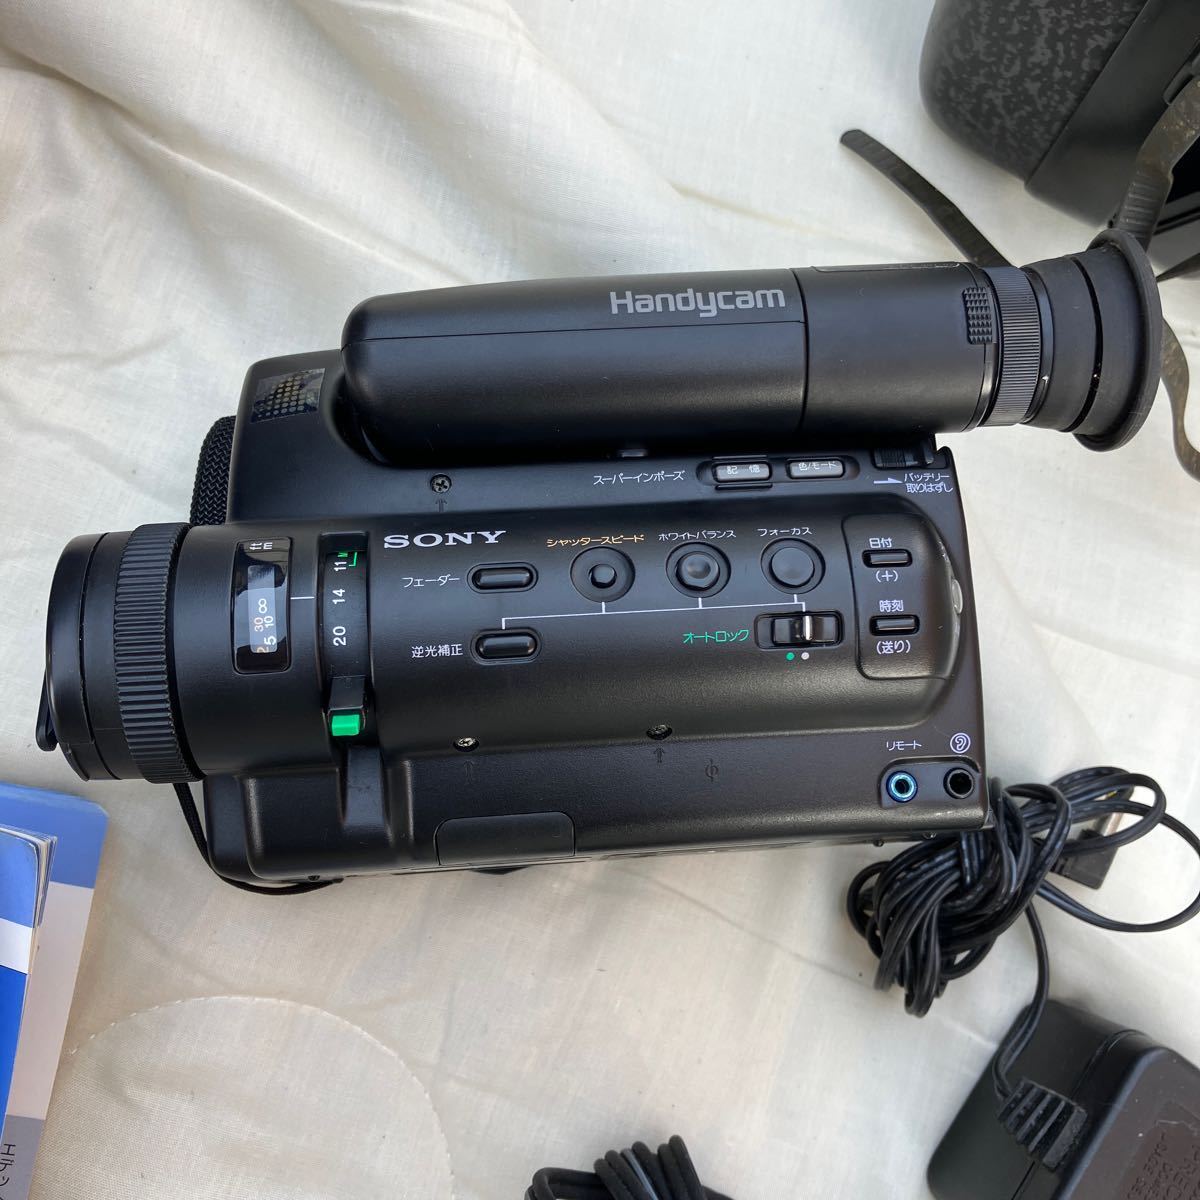  Sony CCD -TR55 Handycam video camera recorder junk part removing 